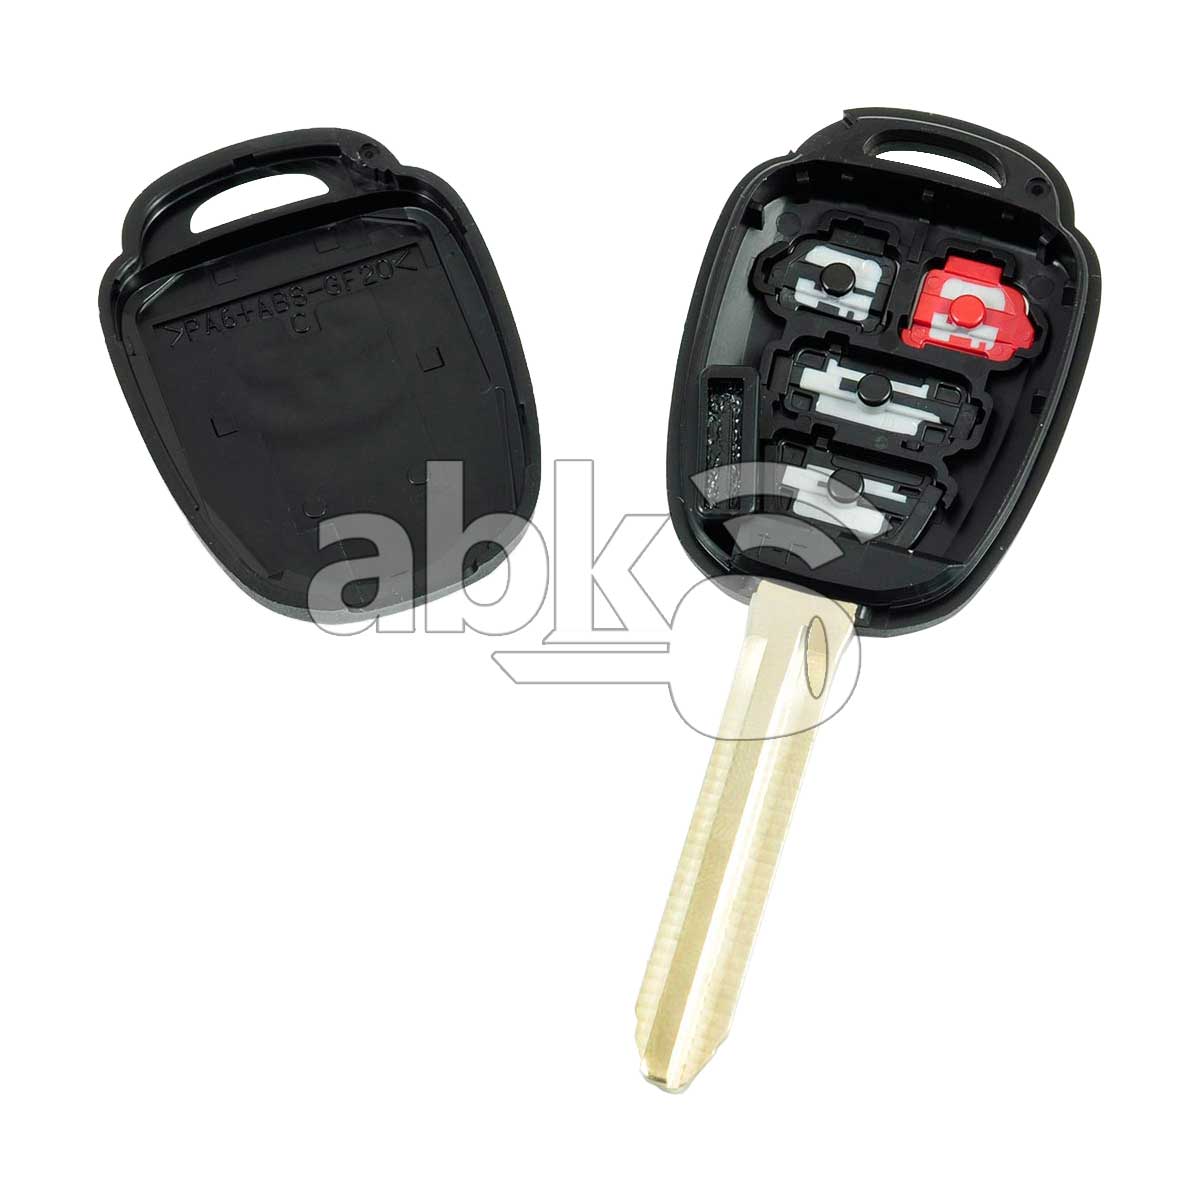 Genuine Toyota 2012+ Key Head Remote Cover 4Buttons 4D-72-G TOY43 - ABK-3643 - ABKEYS.COM